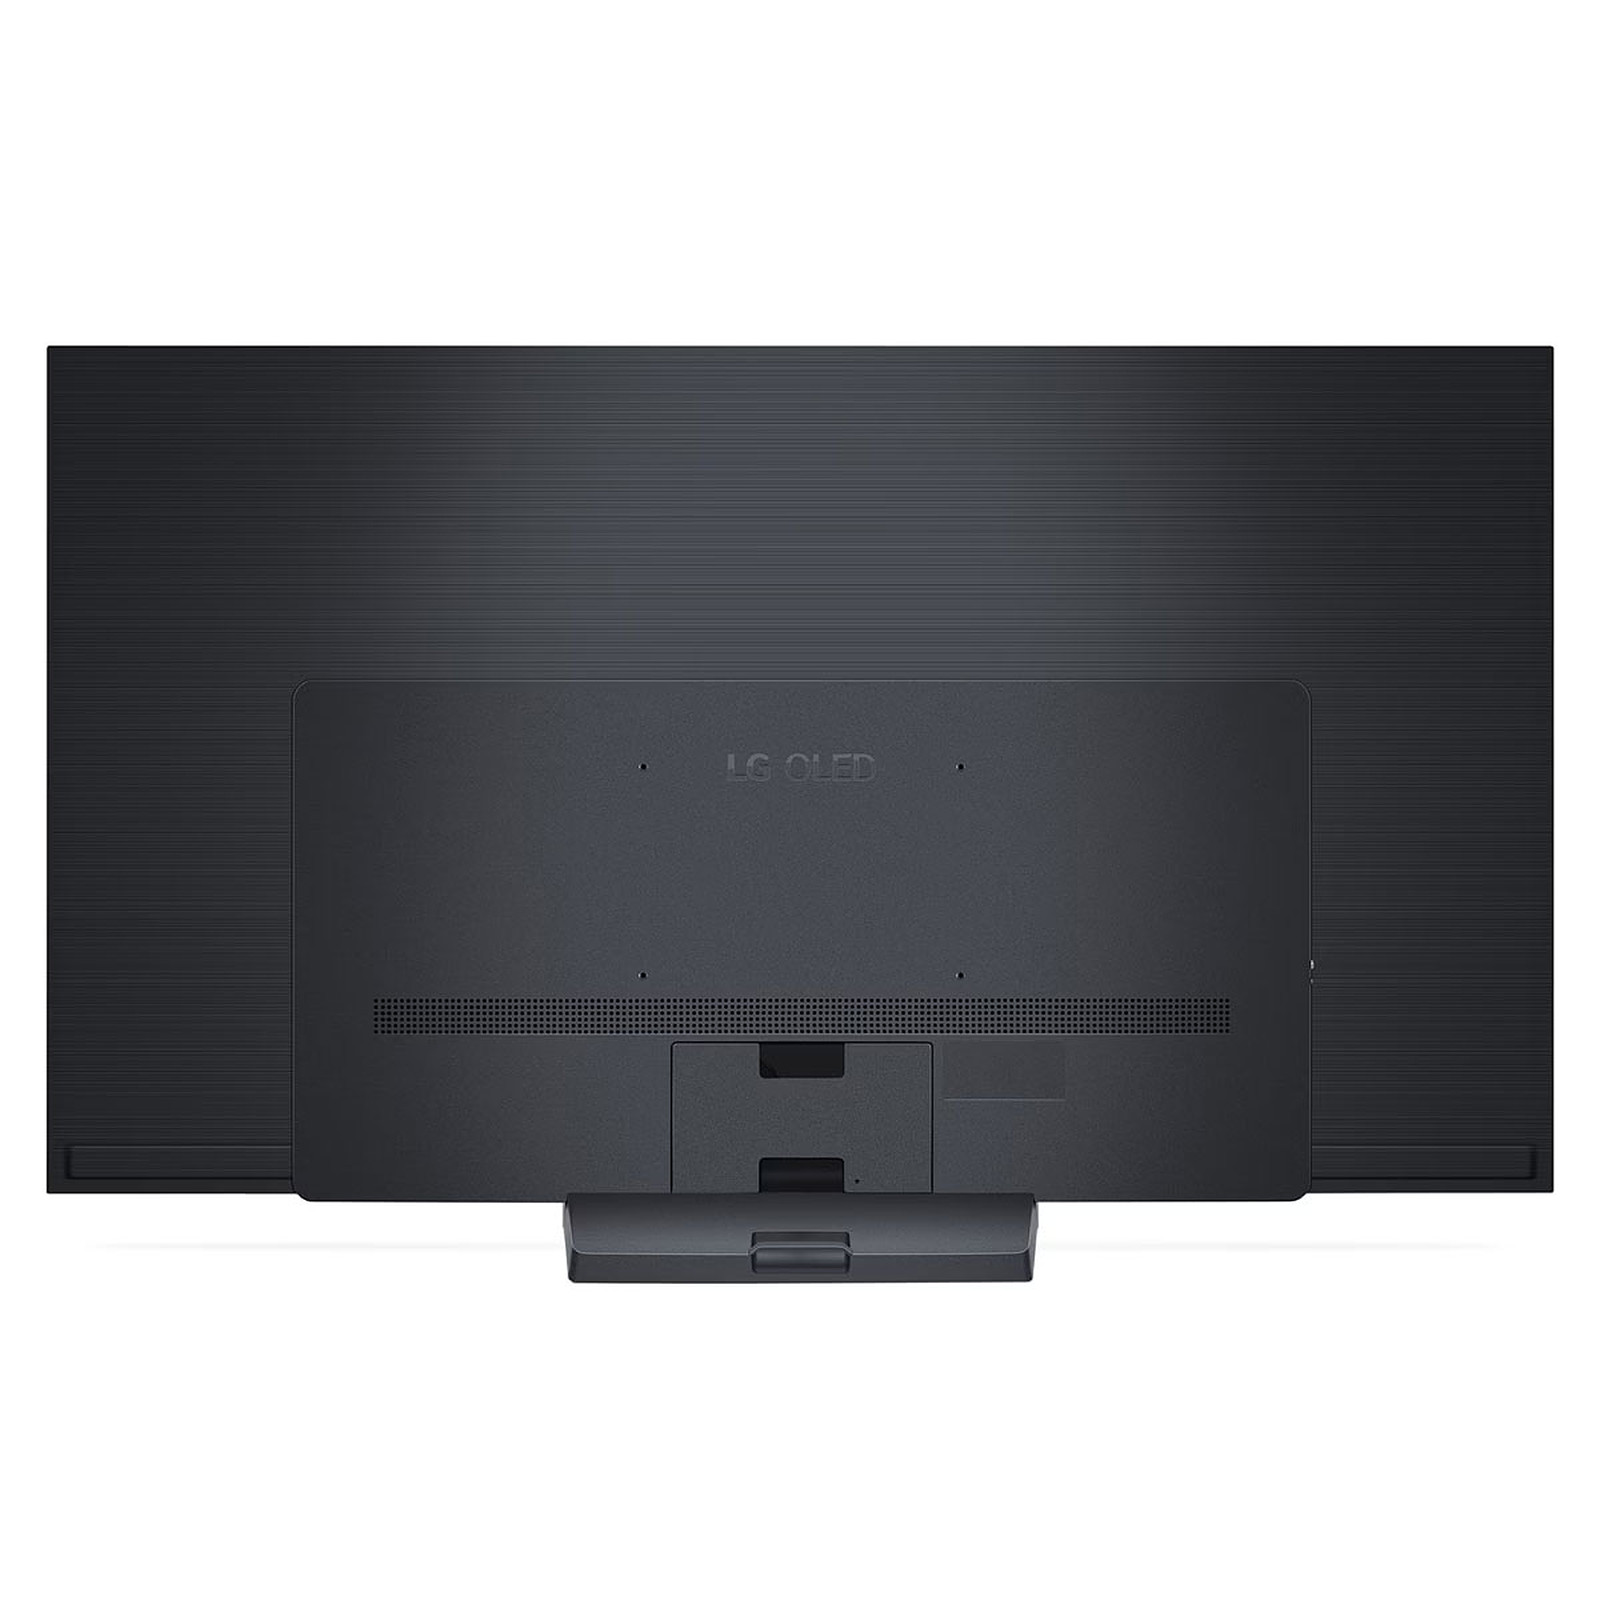 LG OLED77C3 - TV - LDLC 3-year warranty